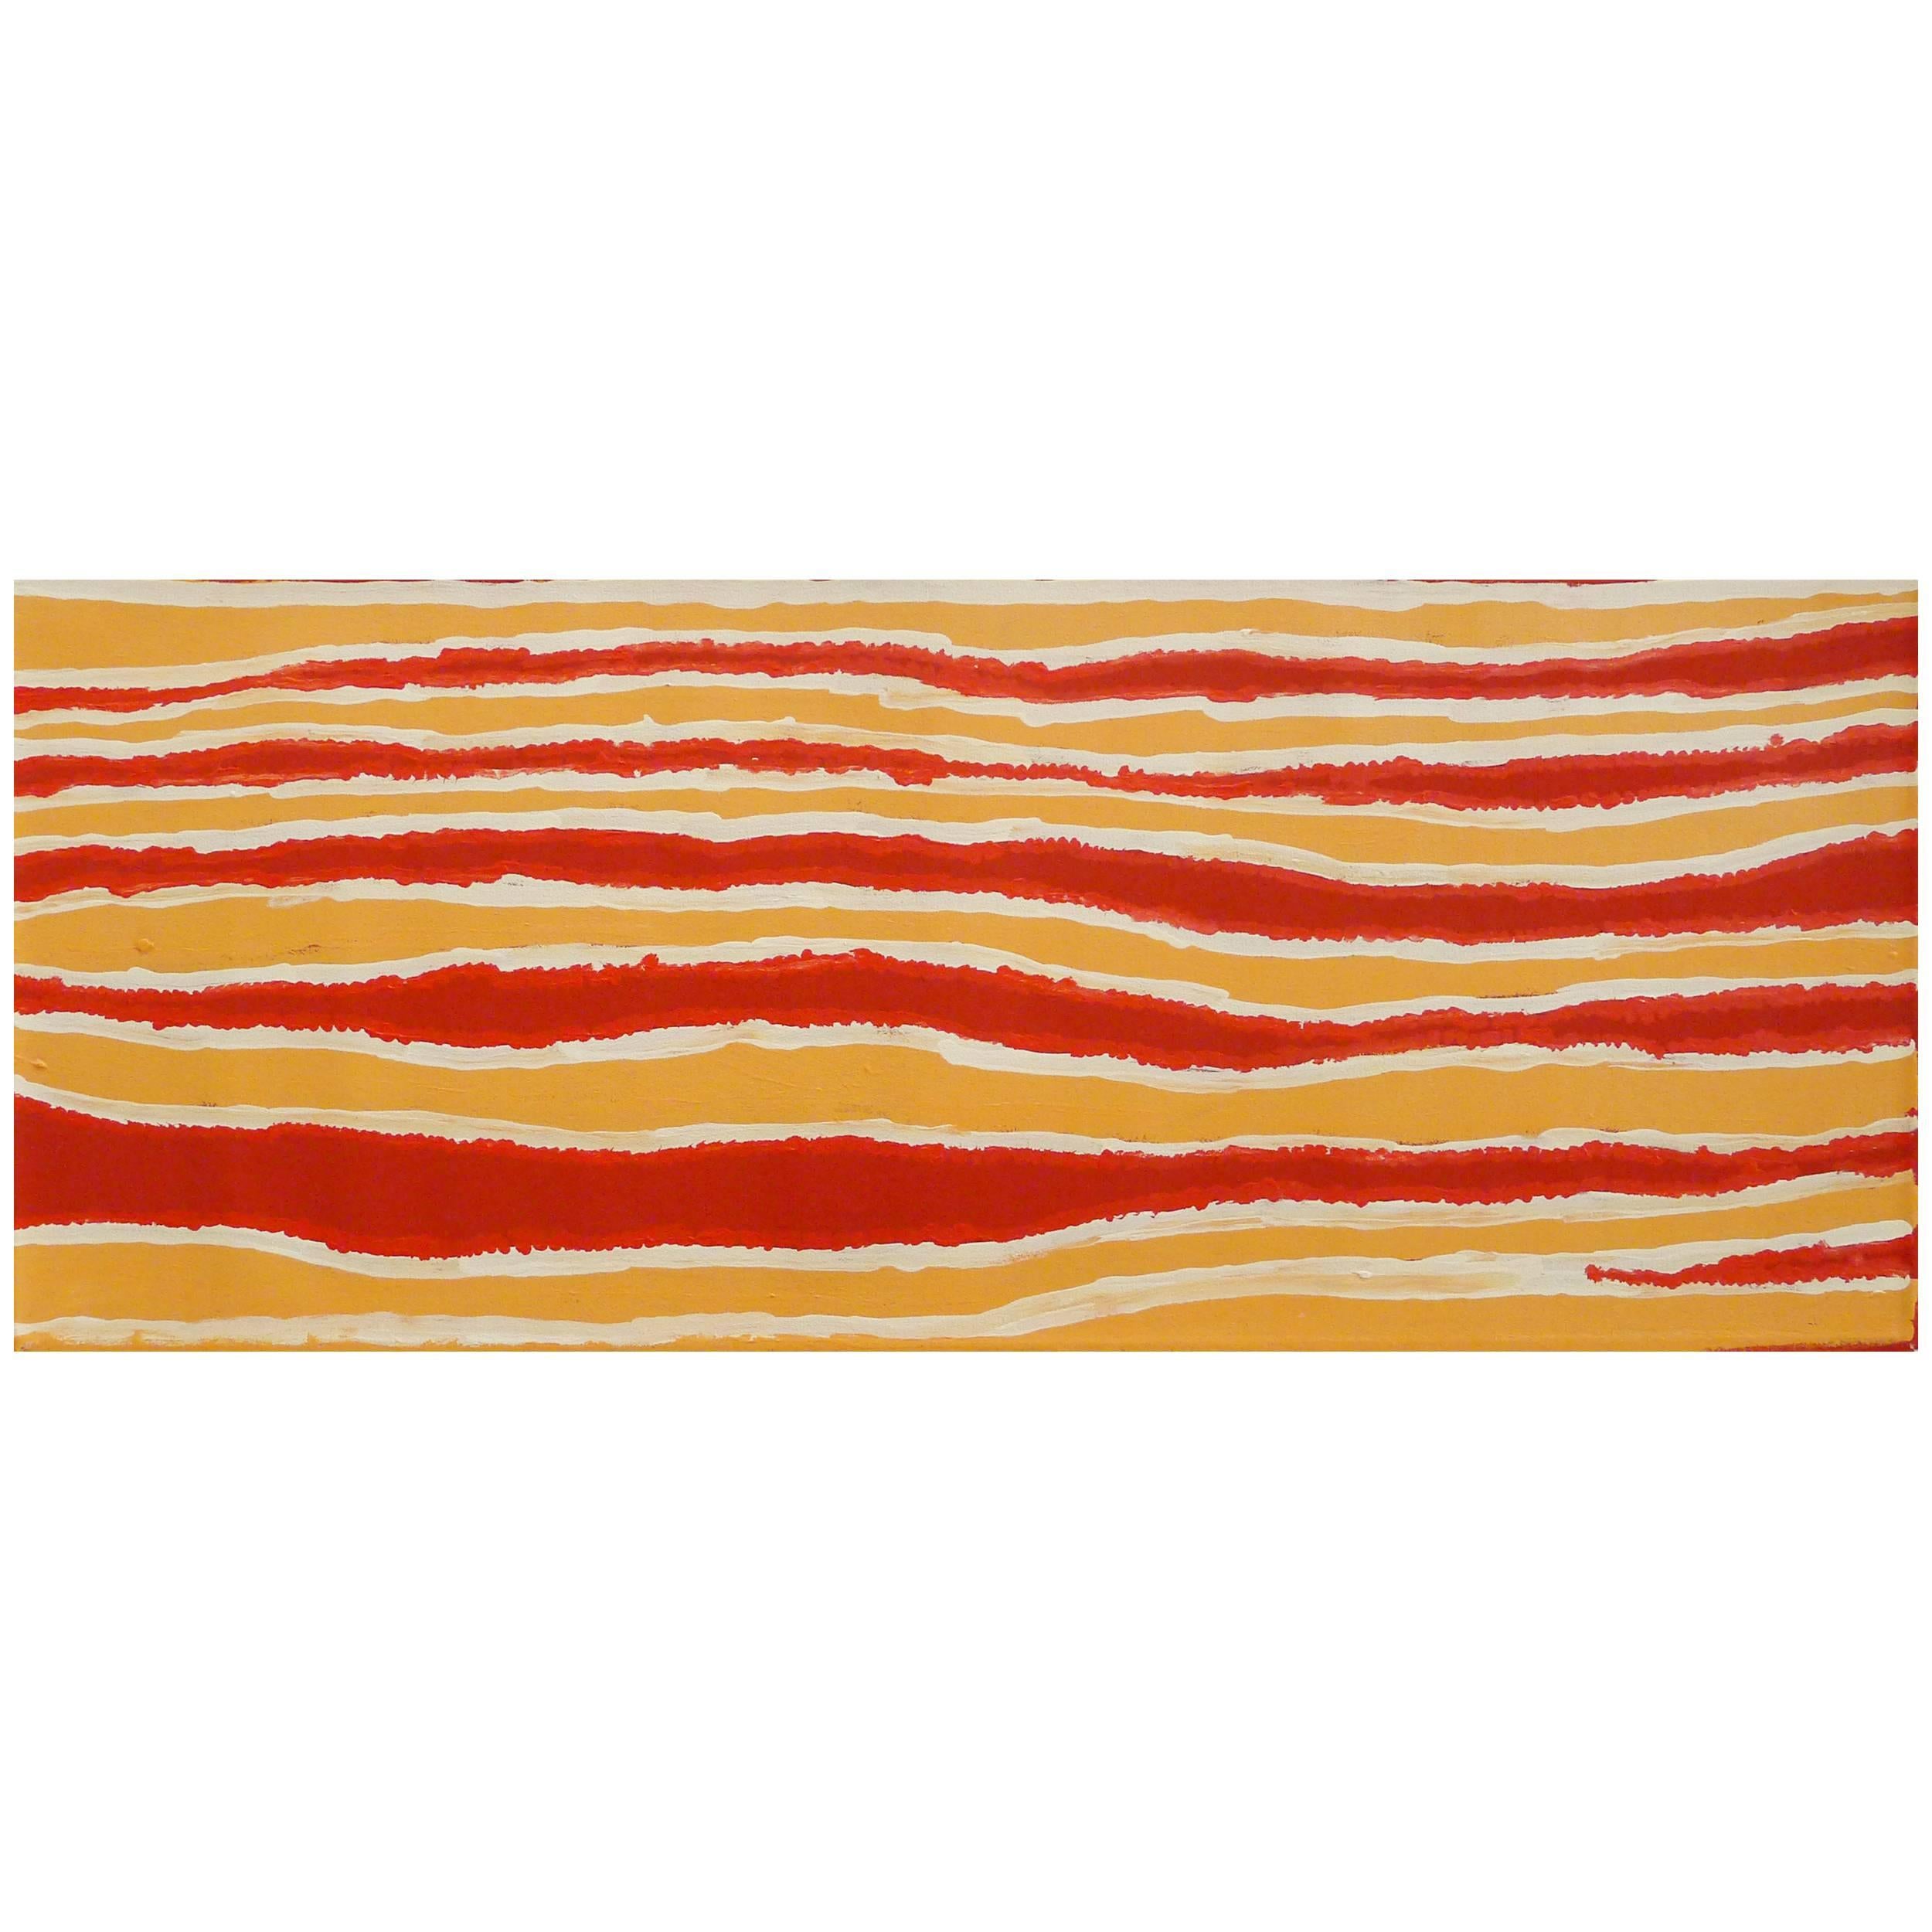 Warm Red and Orange Striped Australian Aboriginal Painting